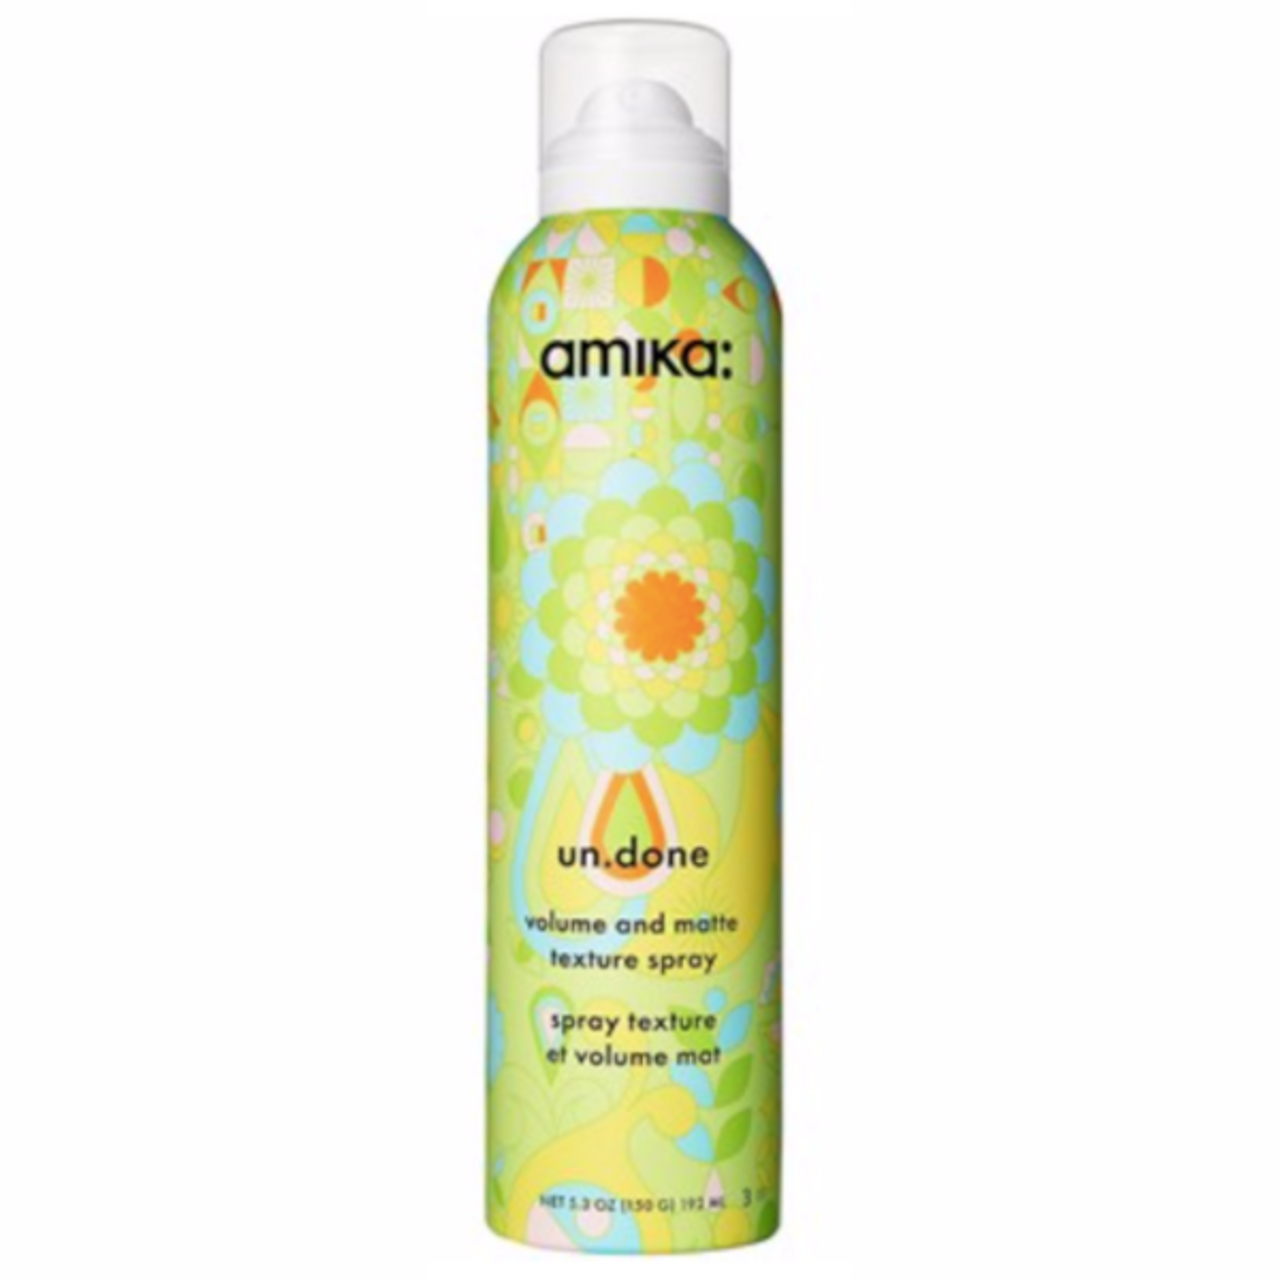 Amika Un.done Volume & Matte Texture Spray - 5.3 oz (80431)